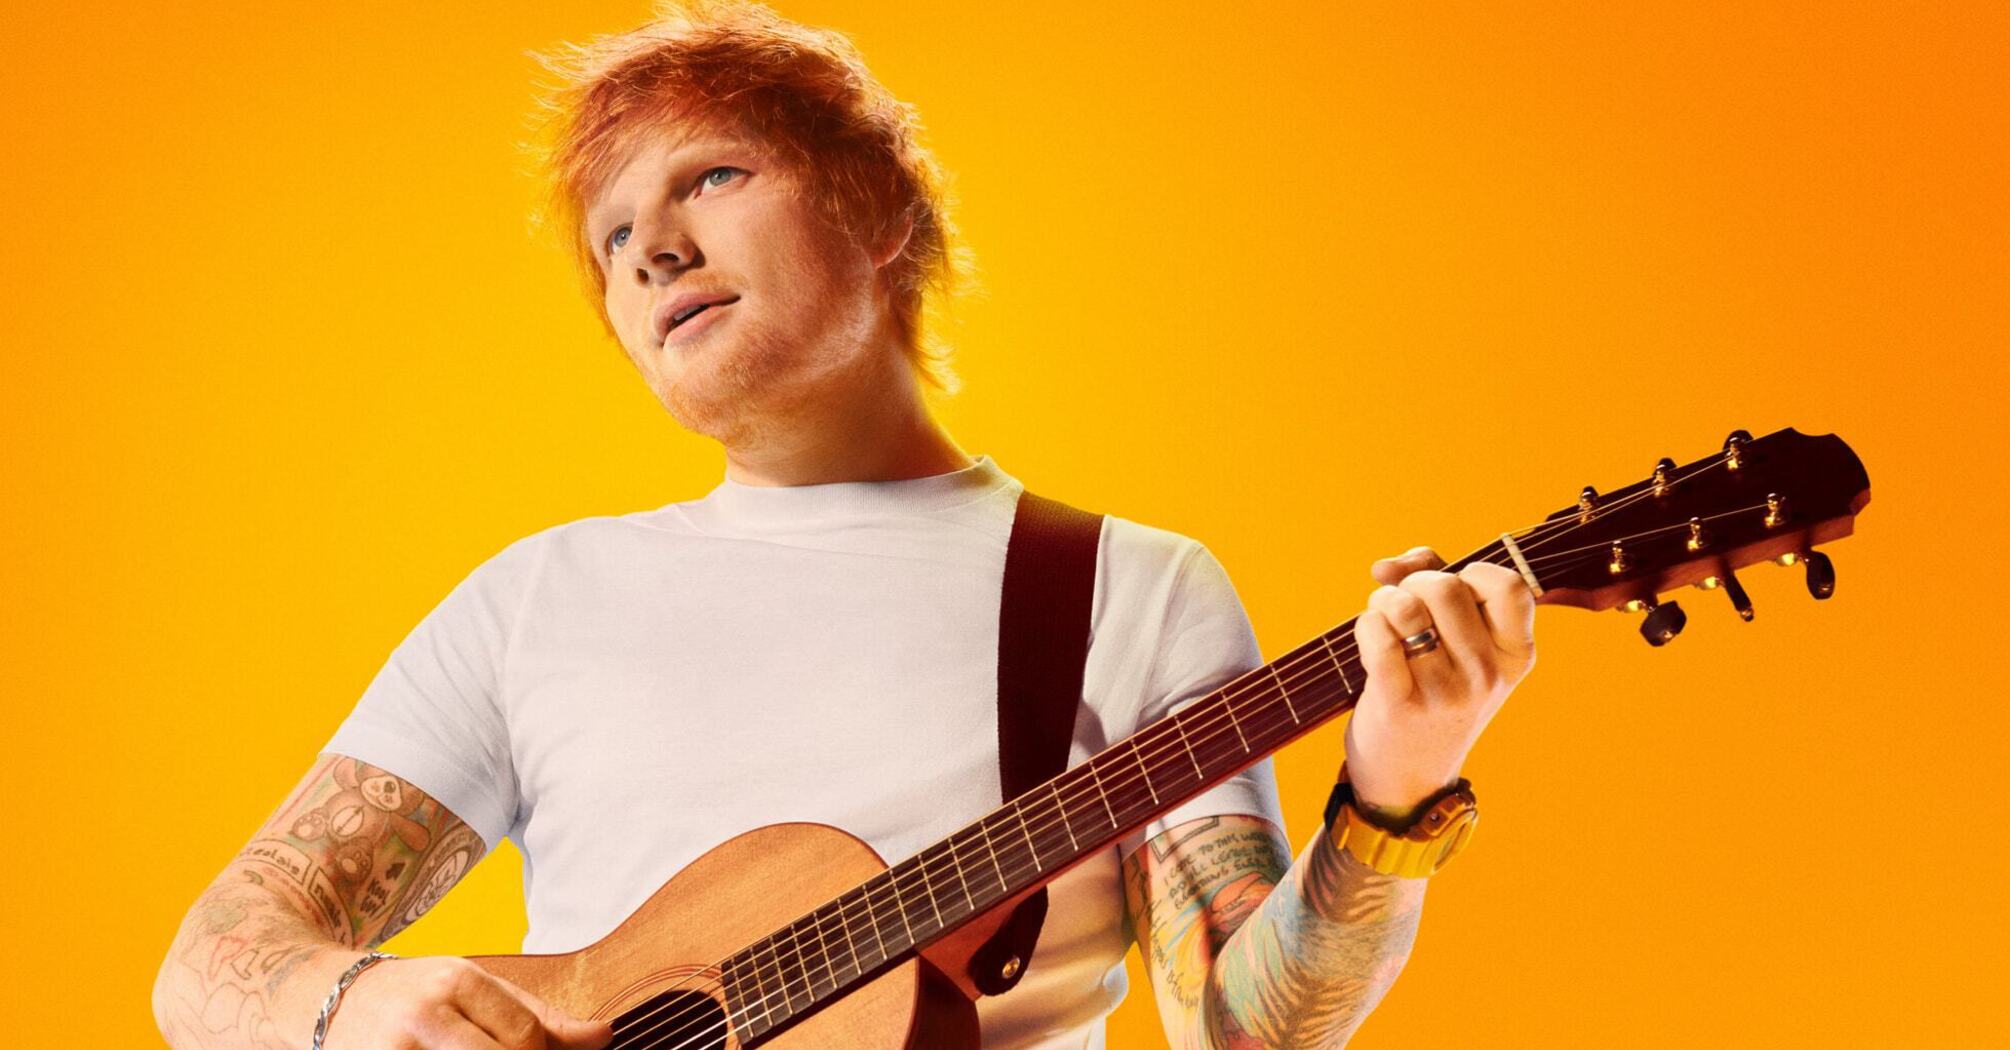 5 Surprising Facts About Ed Sheeran